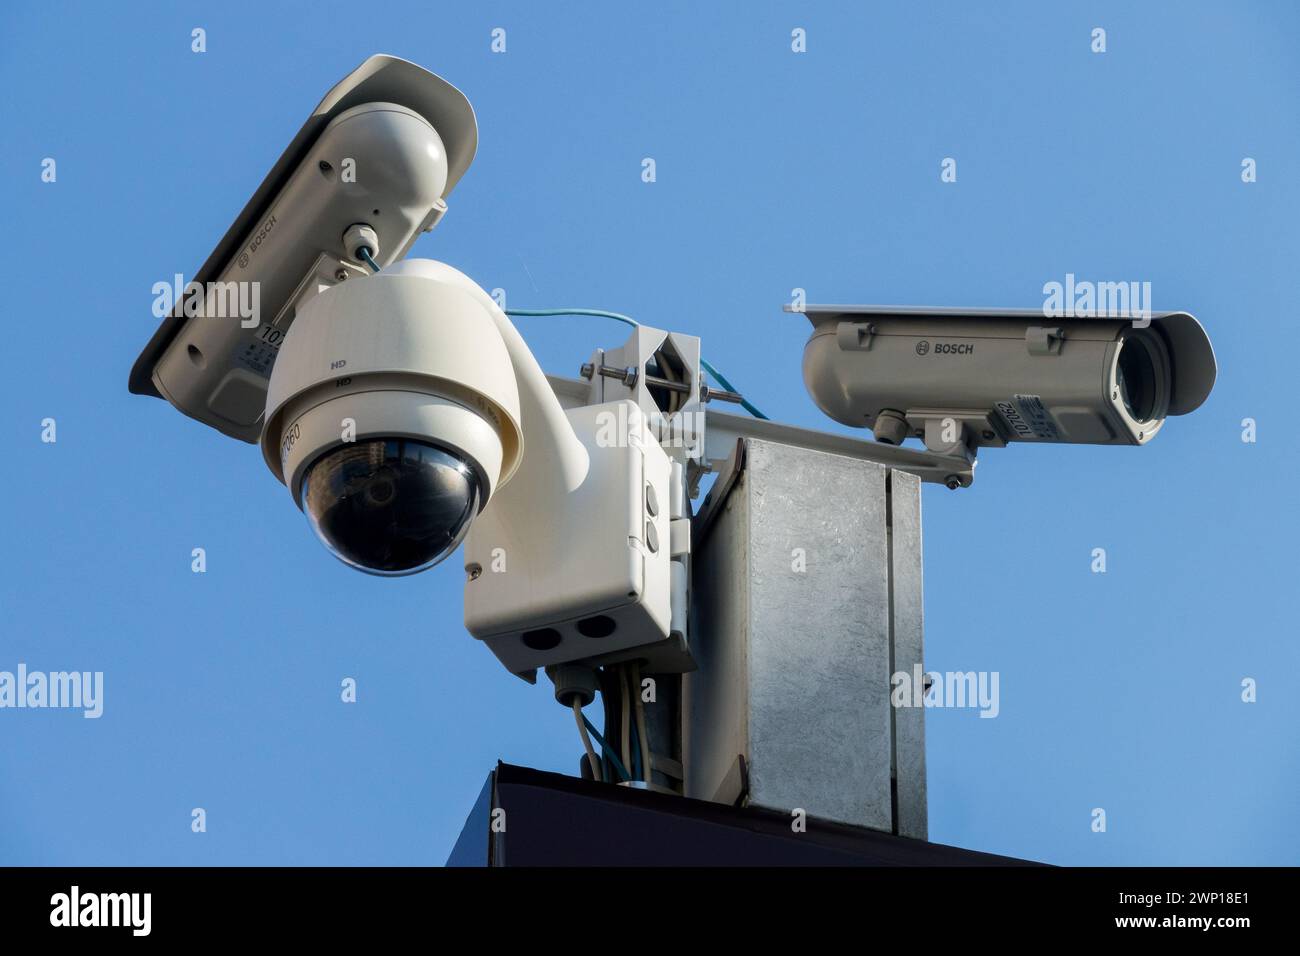 Security CCTV cameras Watching Public Space Czech Republic Europe Stock Photo